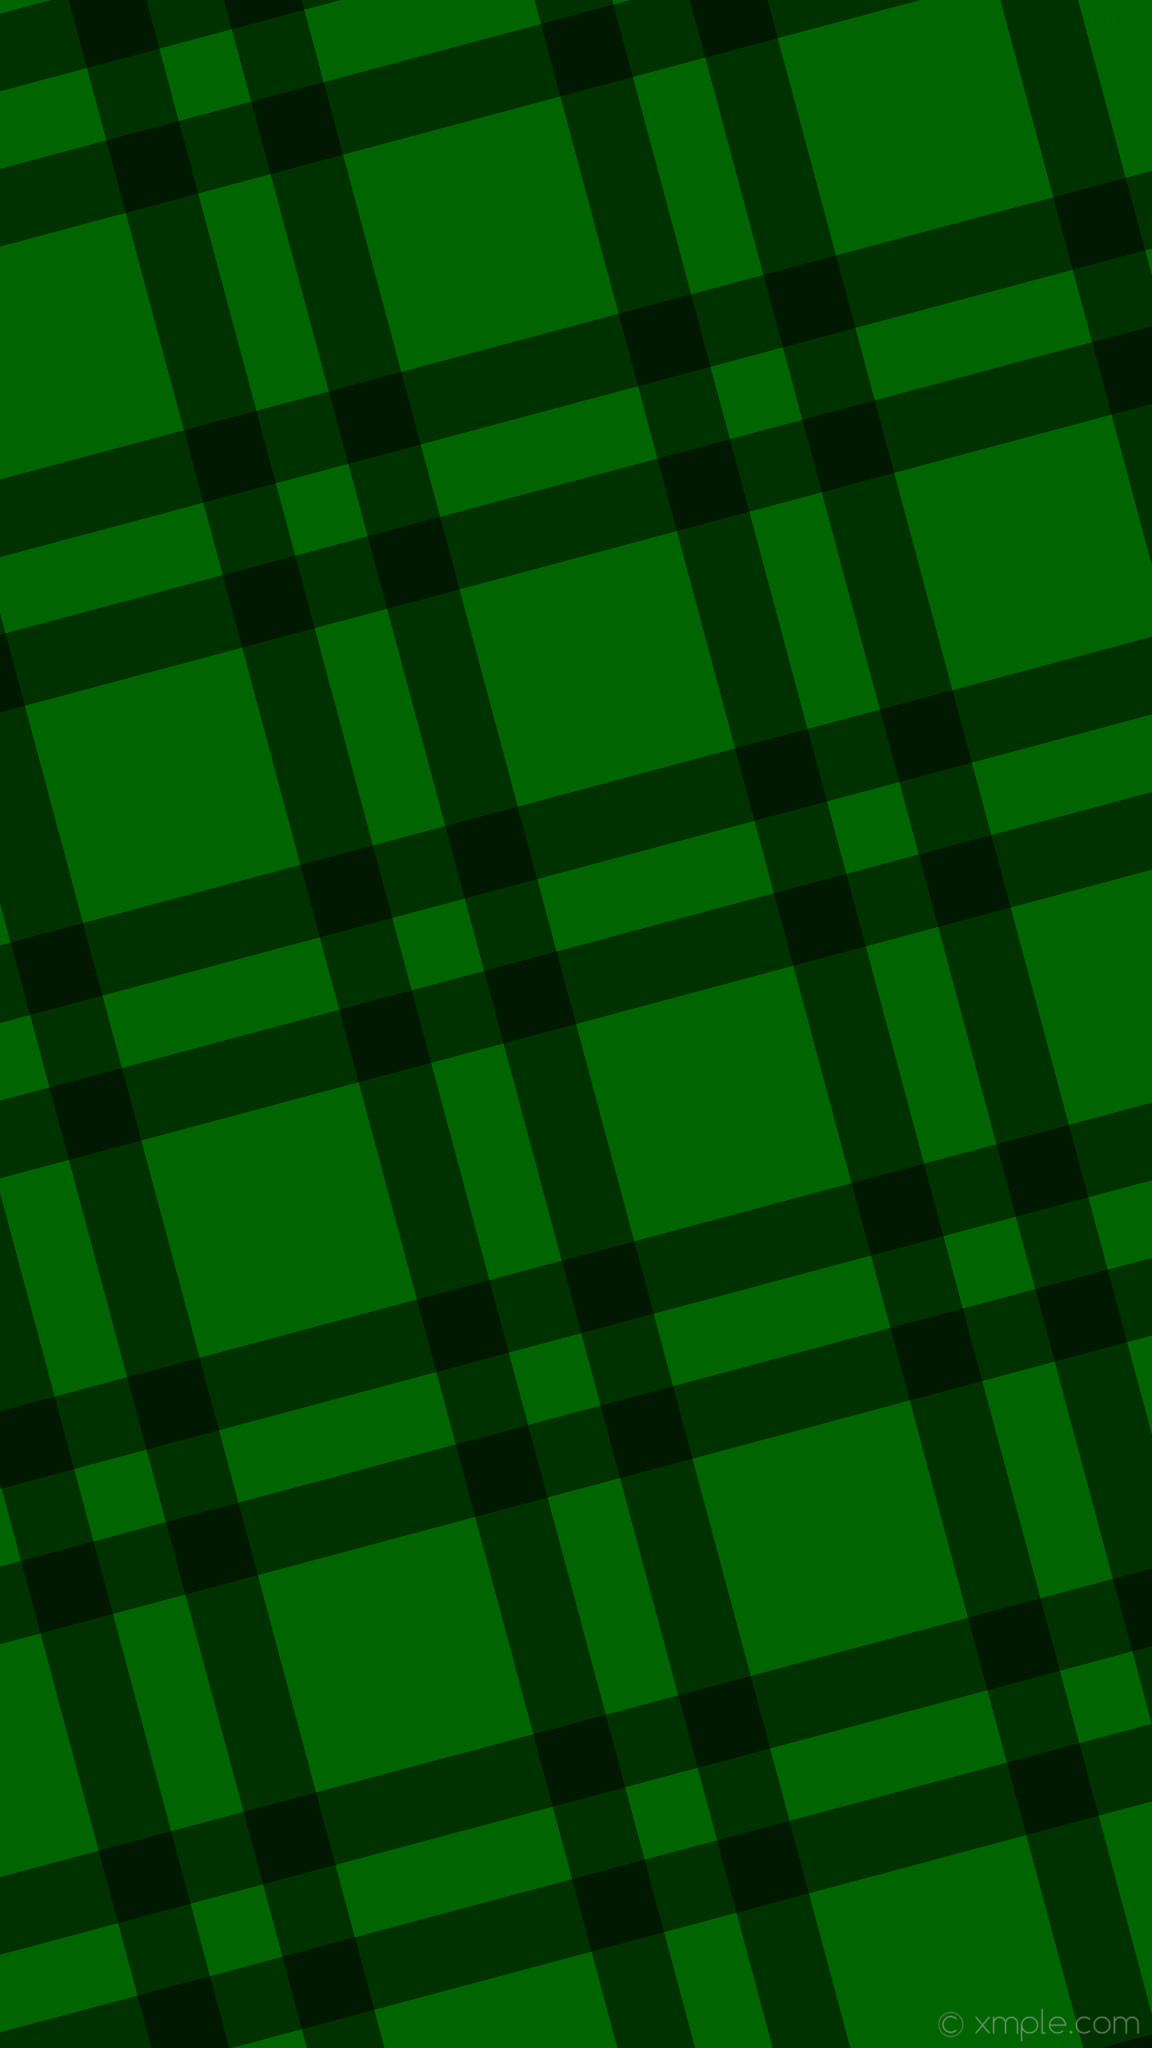 1152x2048 wallpaper black gingham green dual striped dark green #006400 #000000 195Â°  75px